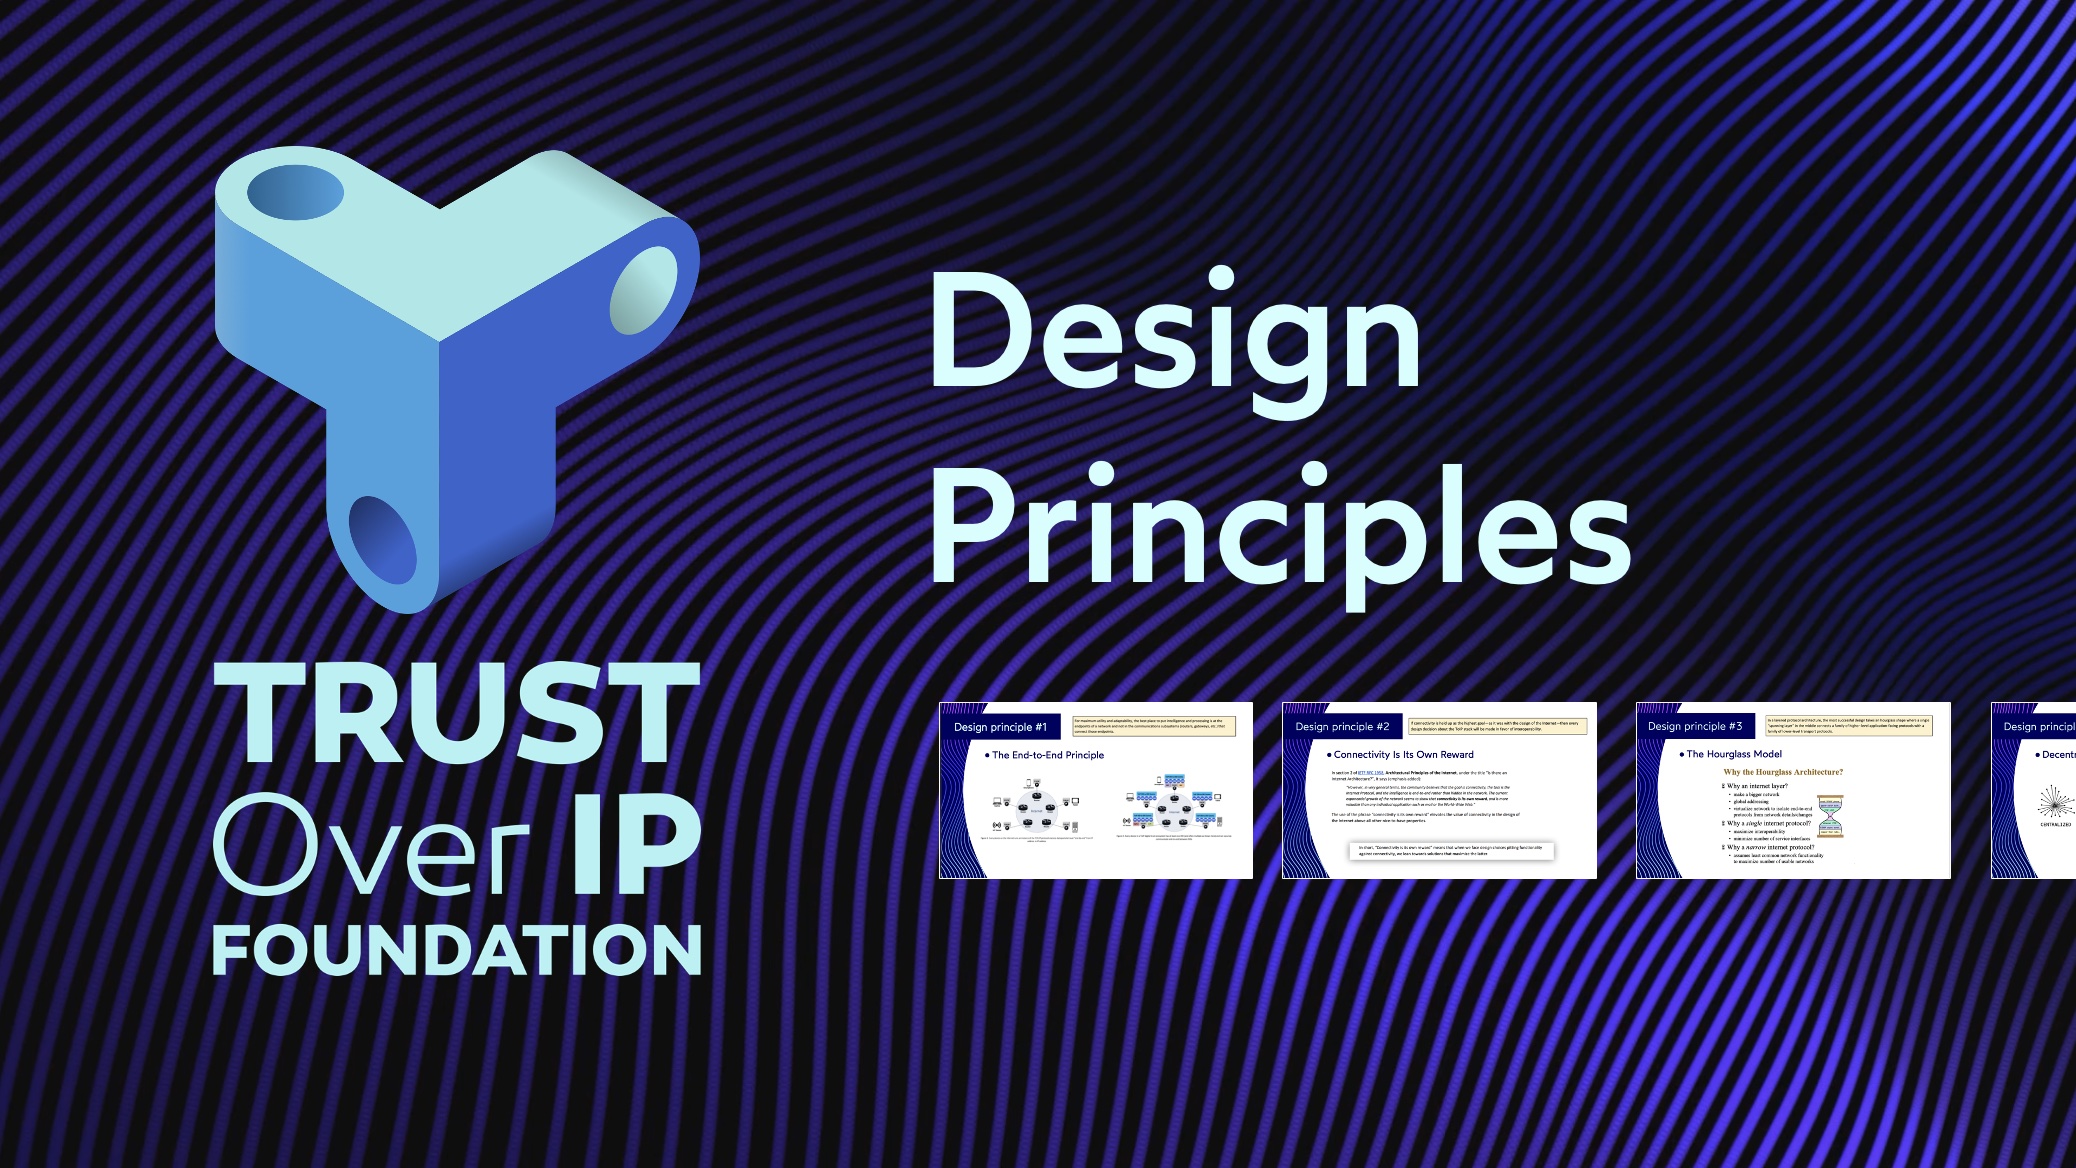 Trust Over IP Foundation Design Principles